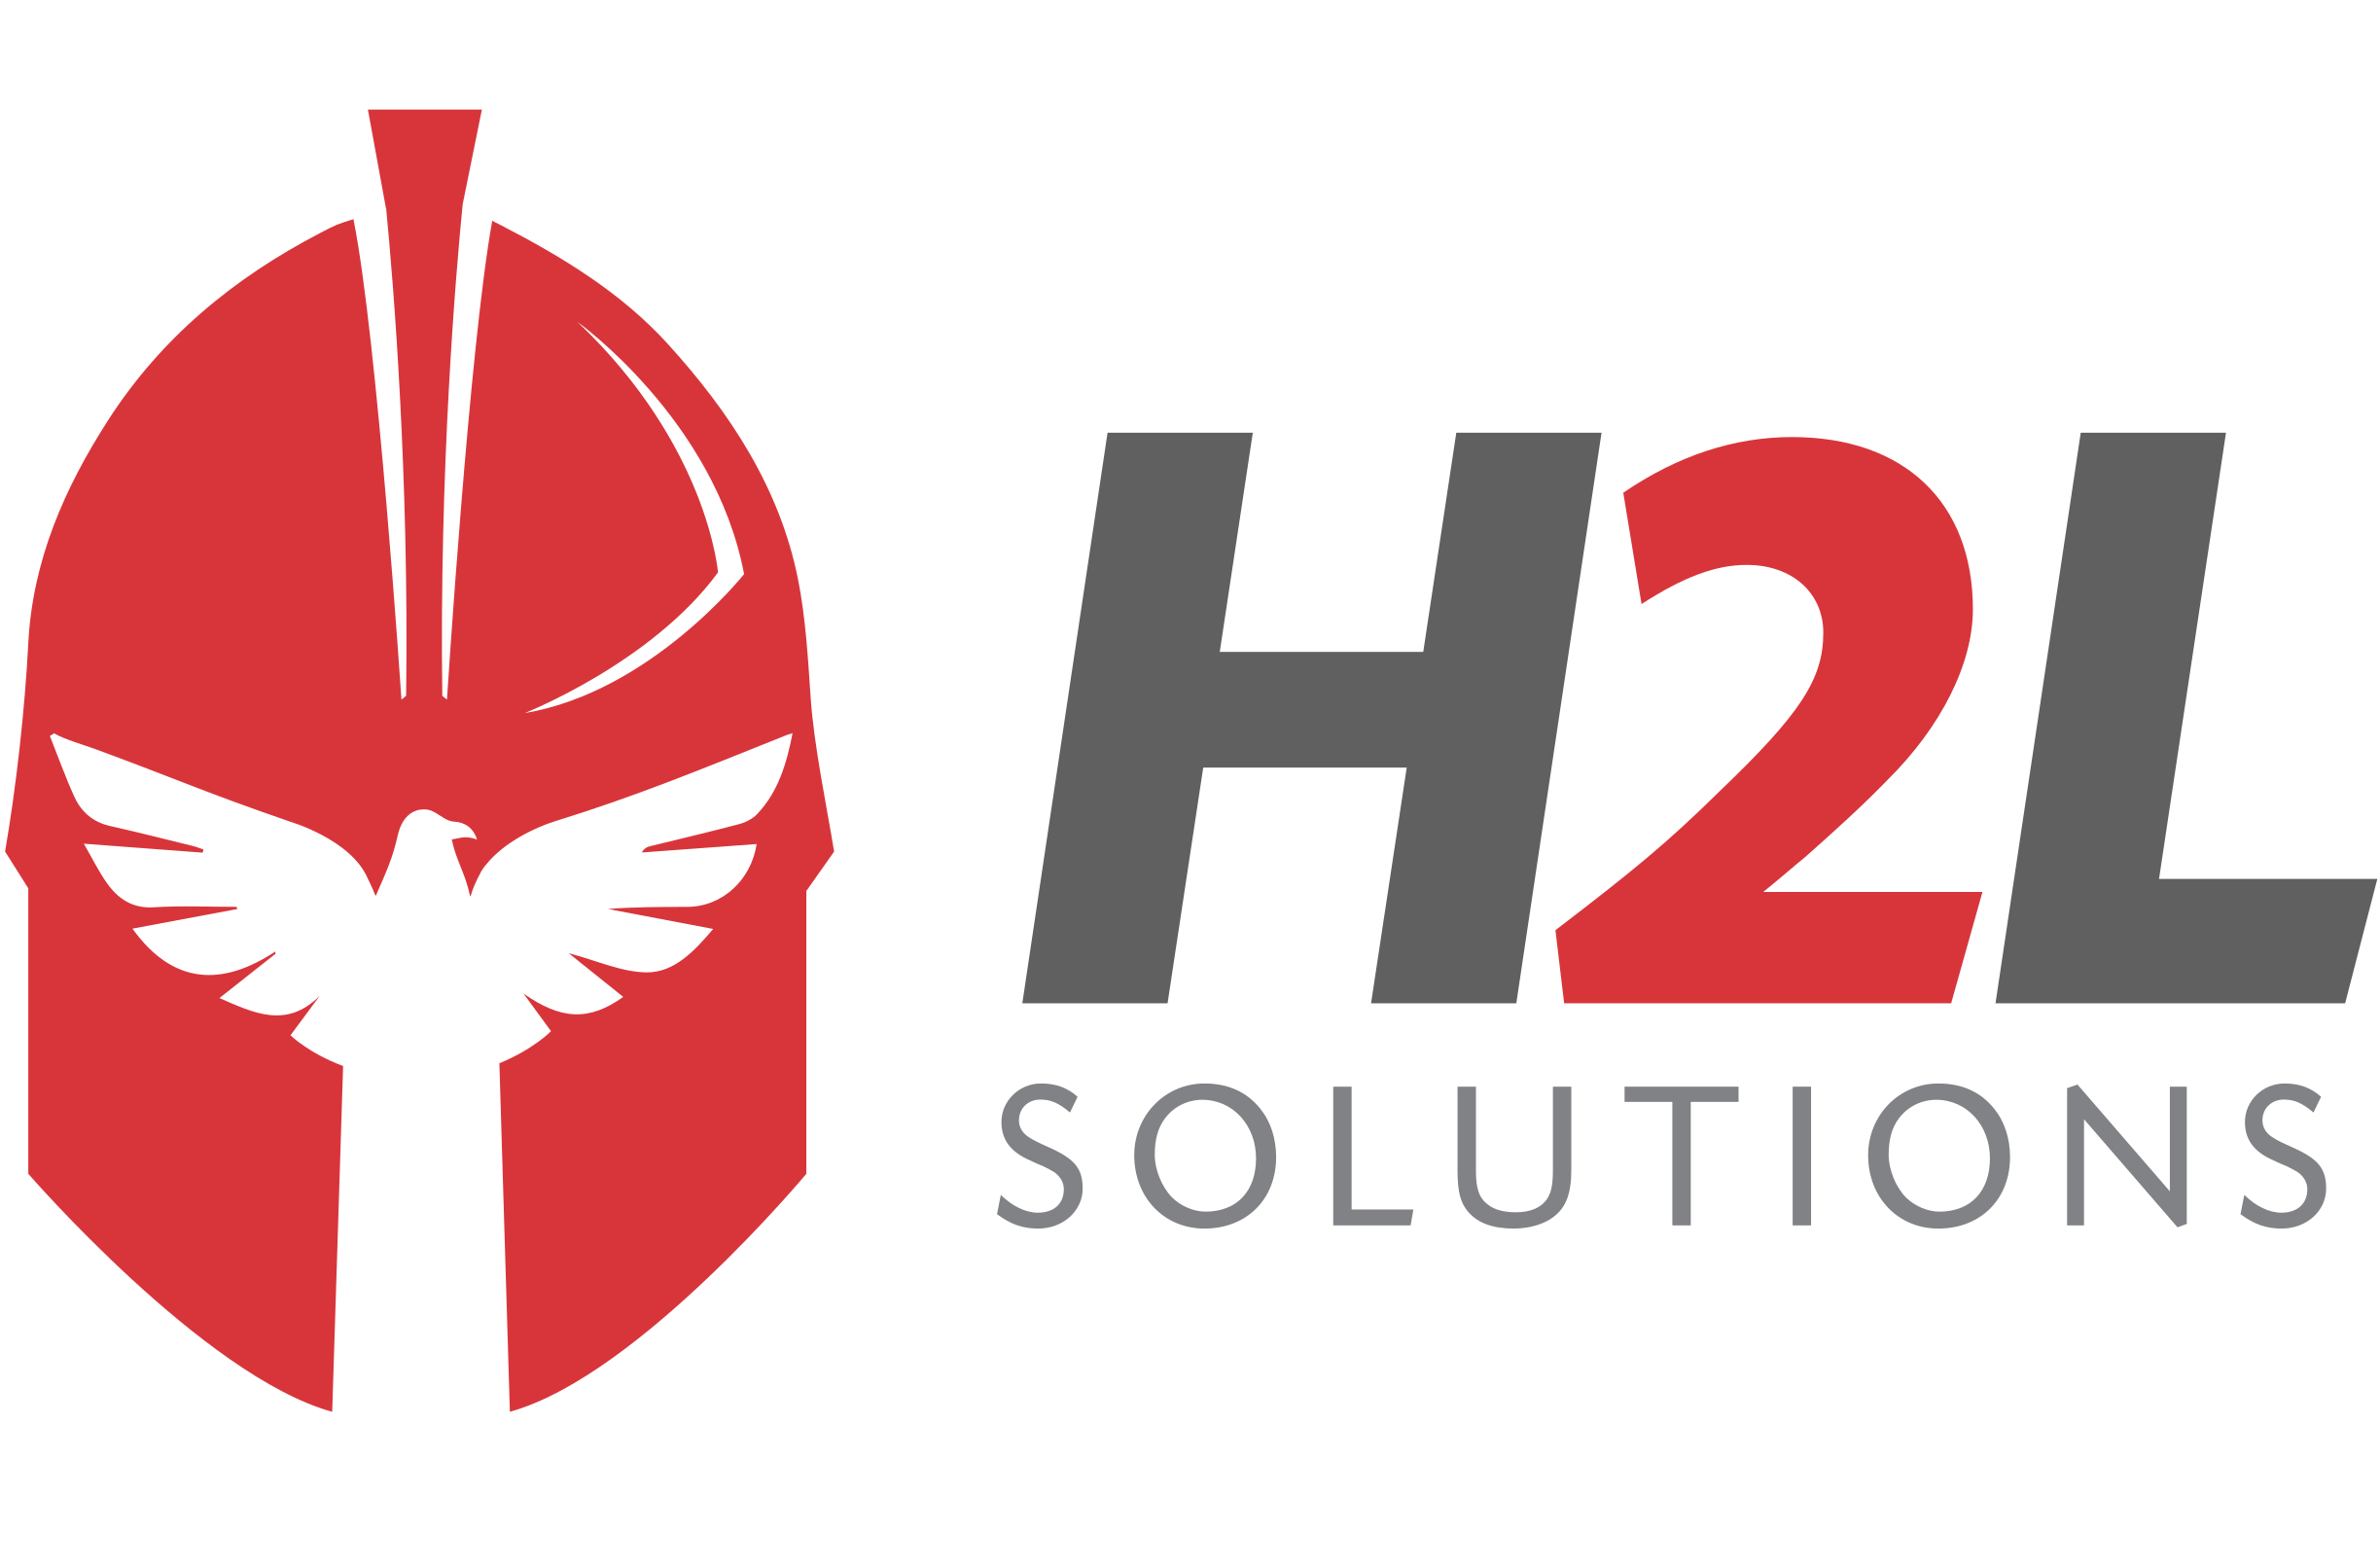 H2L Solutions